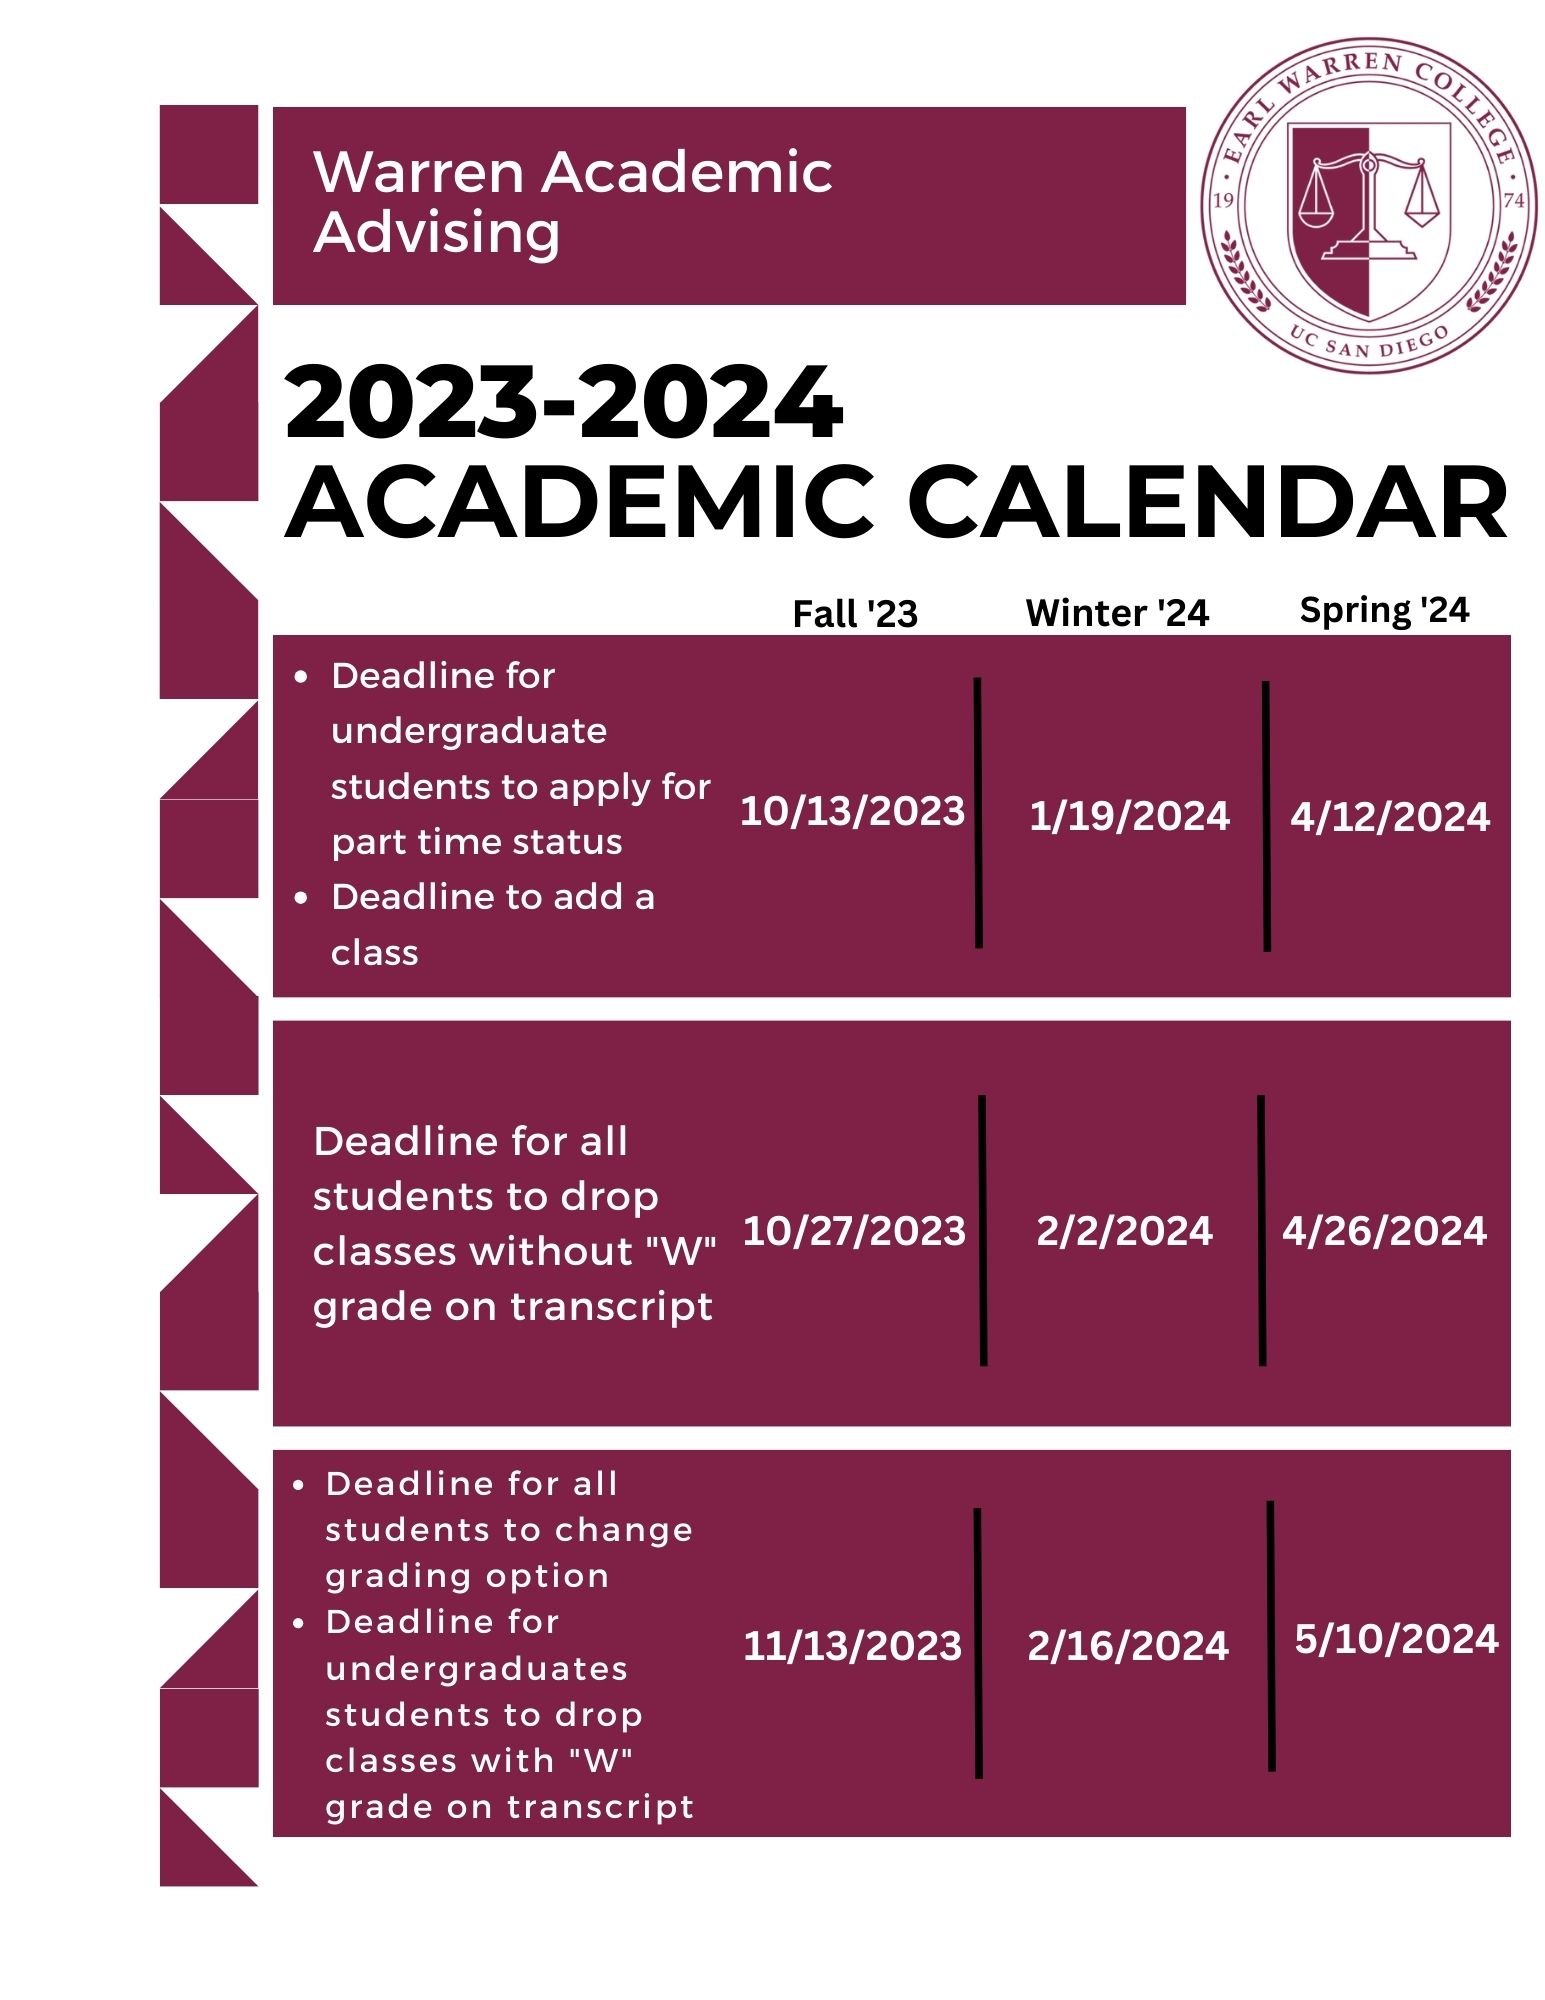 Copy-of-2023-2024-Academic-Calendar.jpg